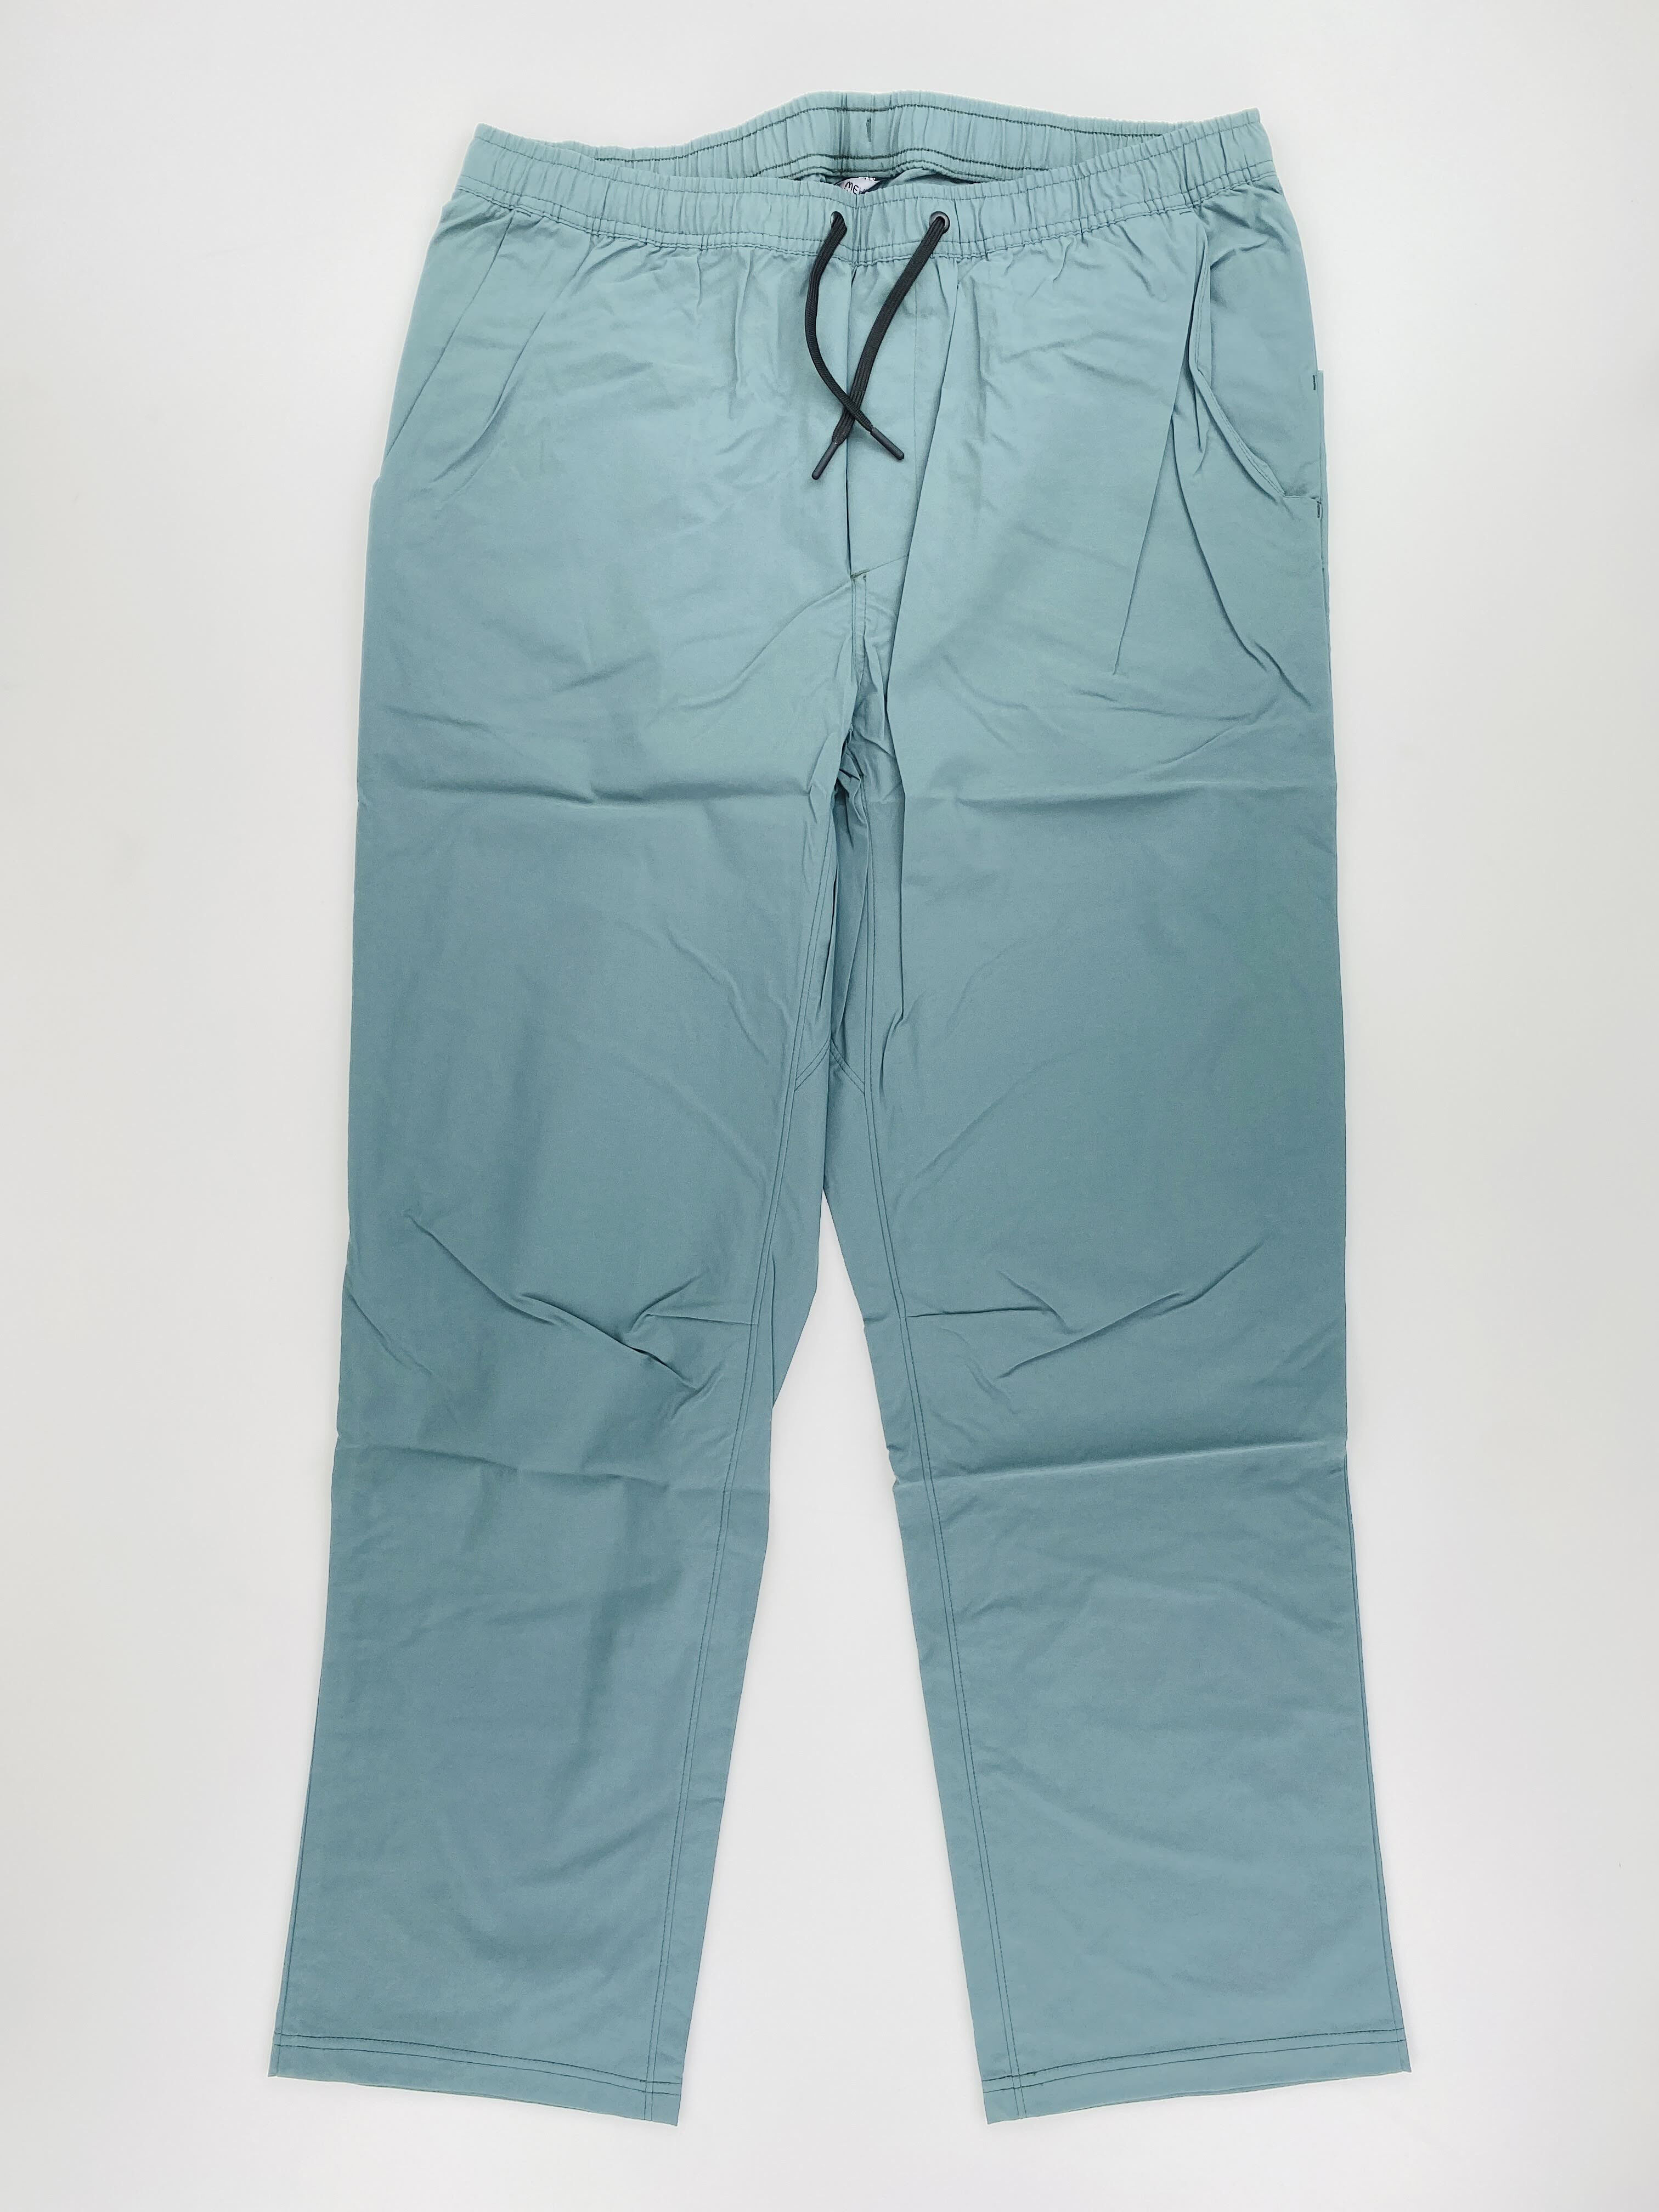 Mountain Hardwear Basin™ Pull-On Man Pant Regular - Seconde main Pantalon randonnée homme - Vert - XL | Hardloop